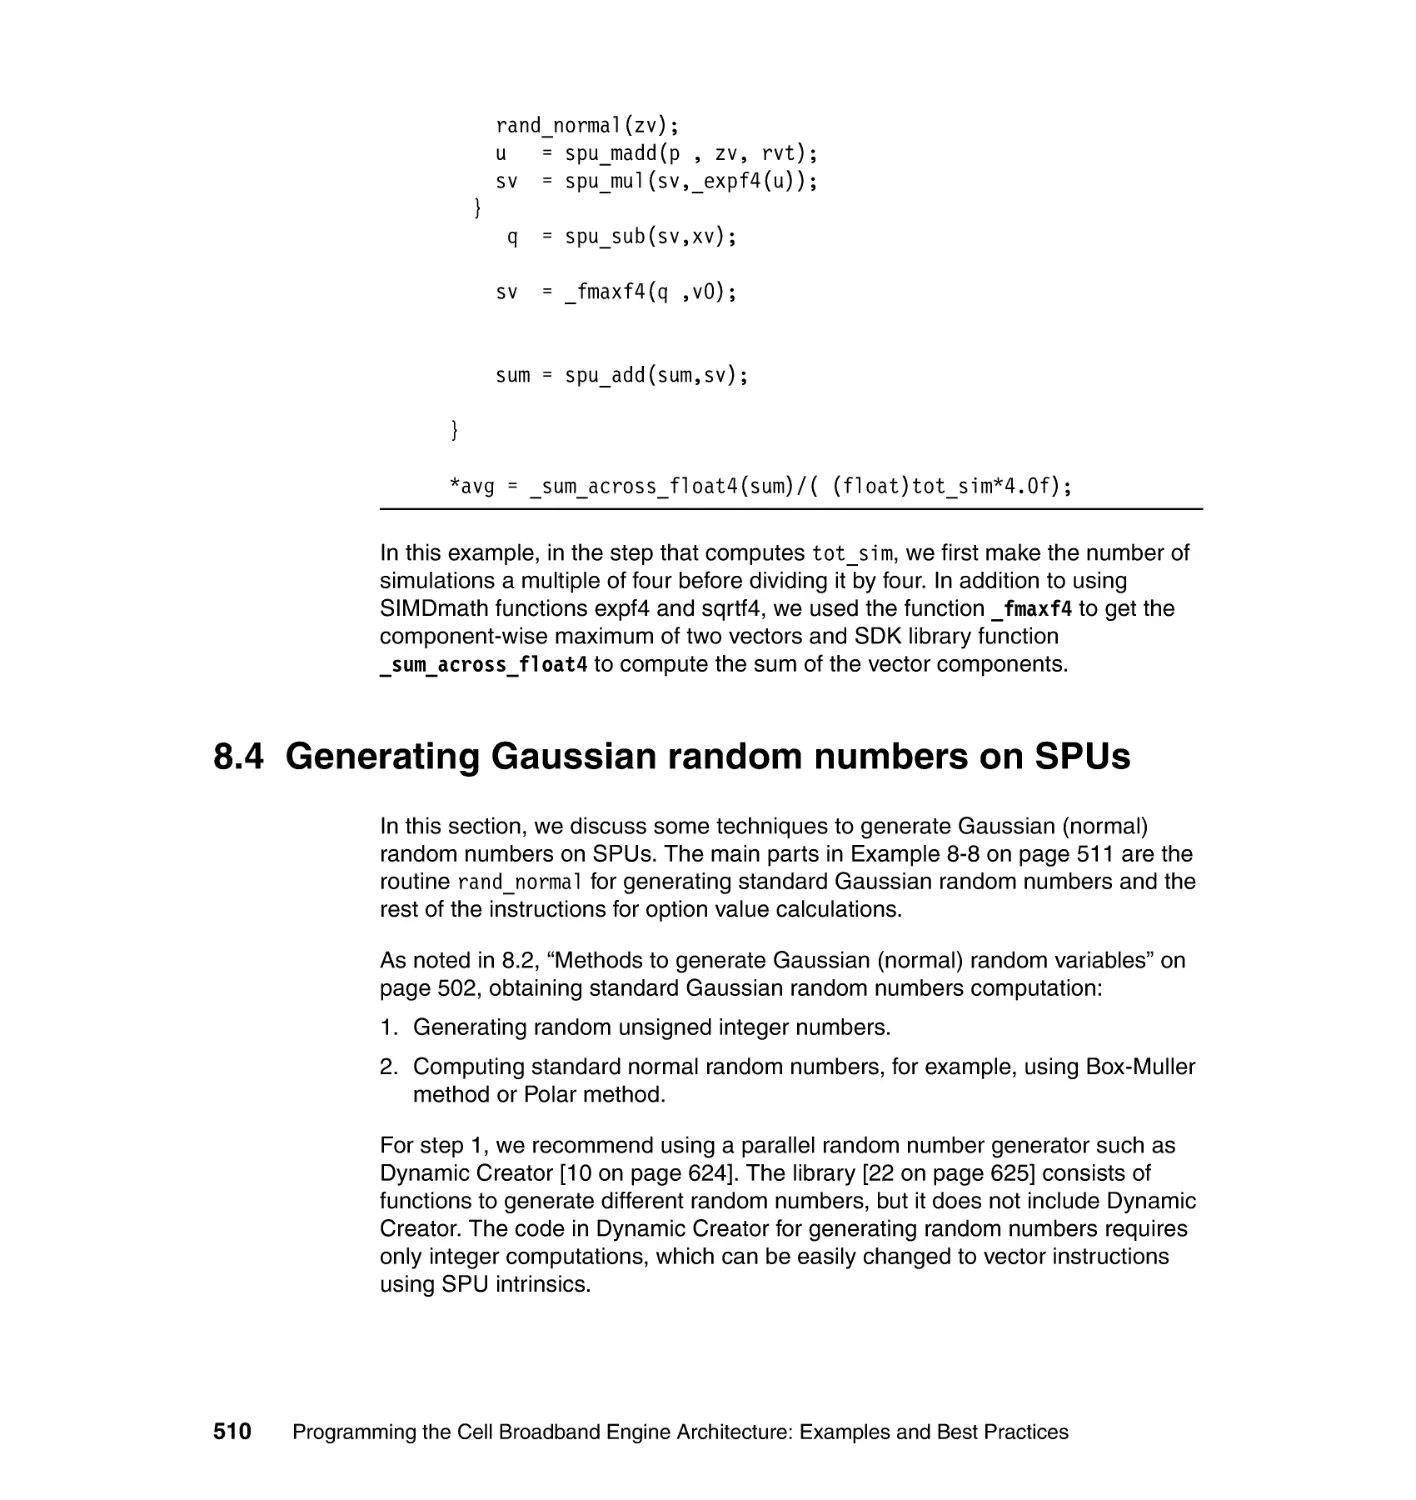 8.4 Generating Gaussian random numbers on SPUs